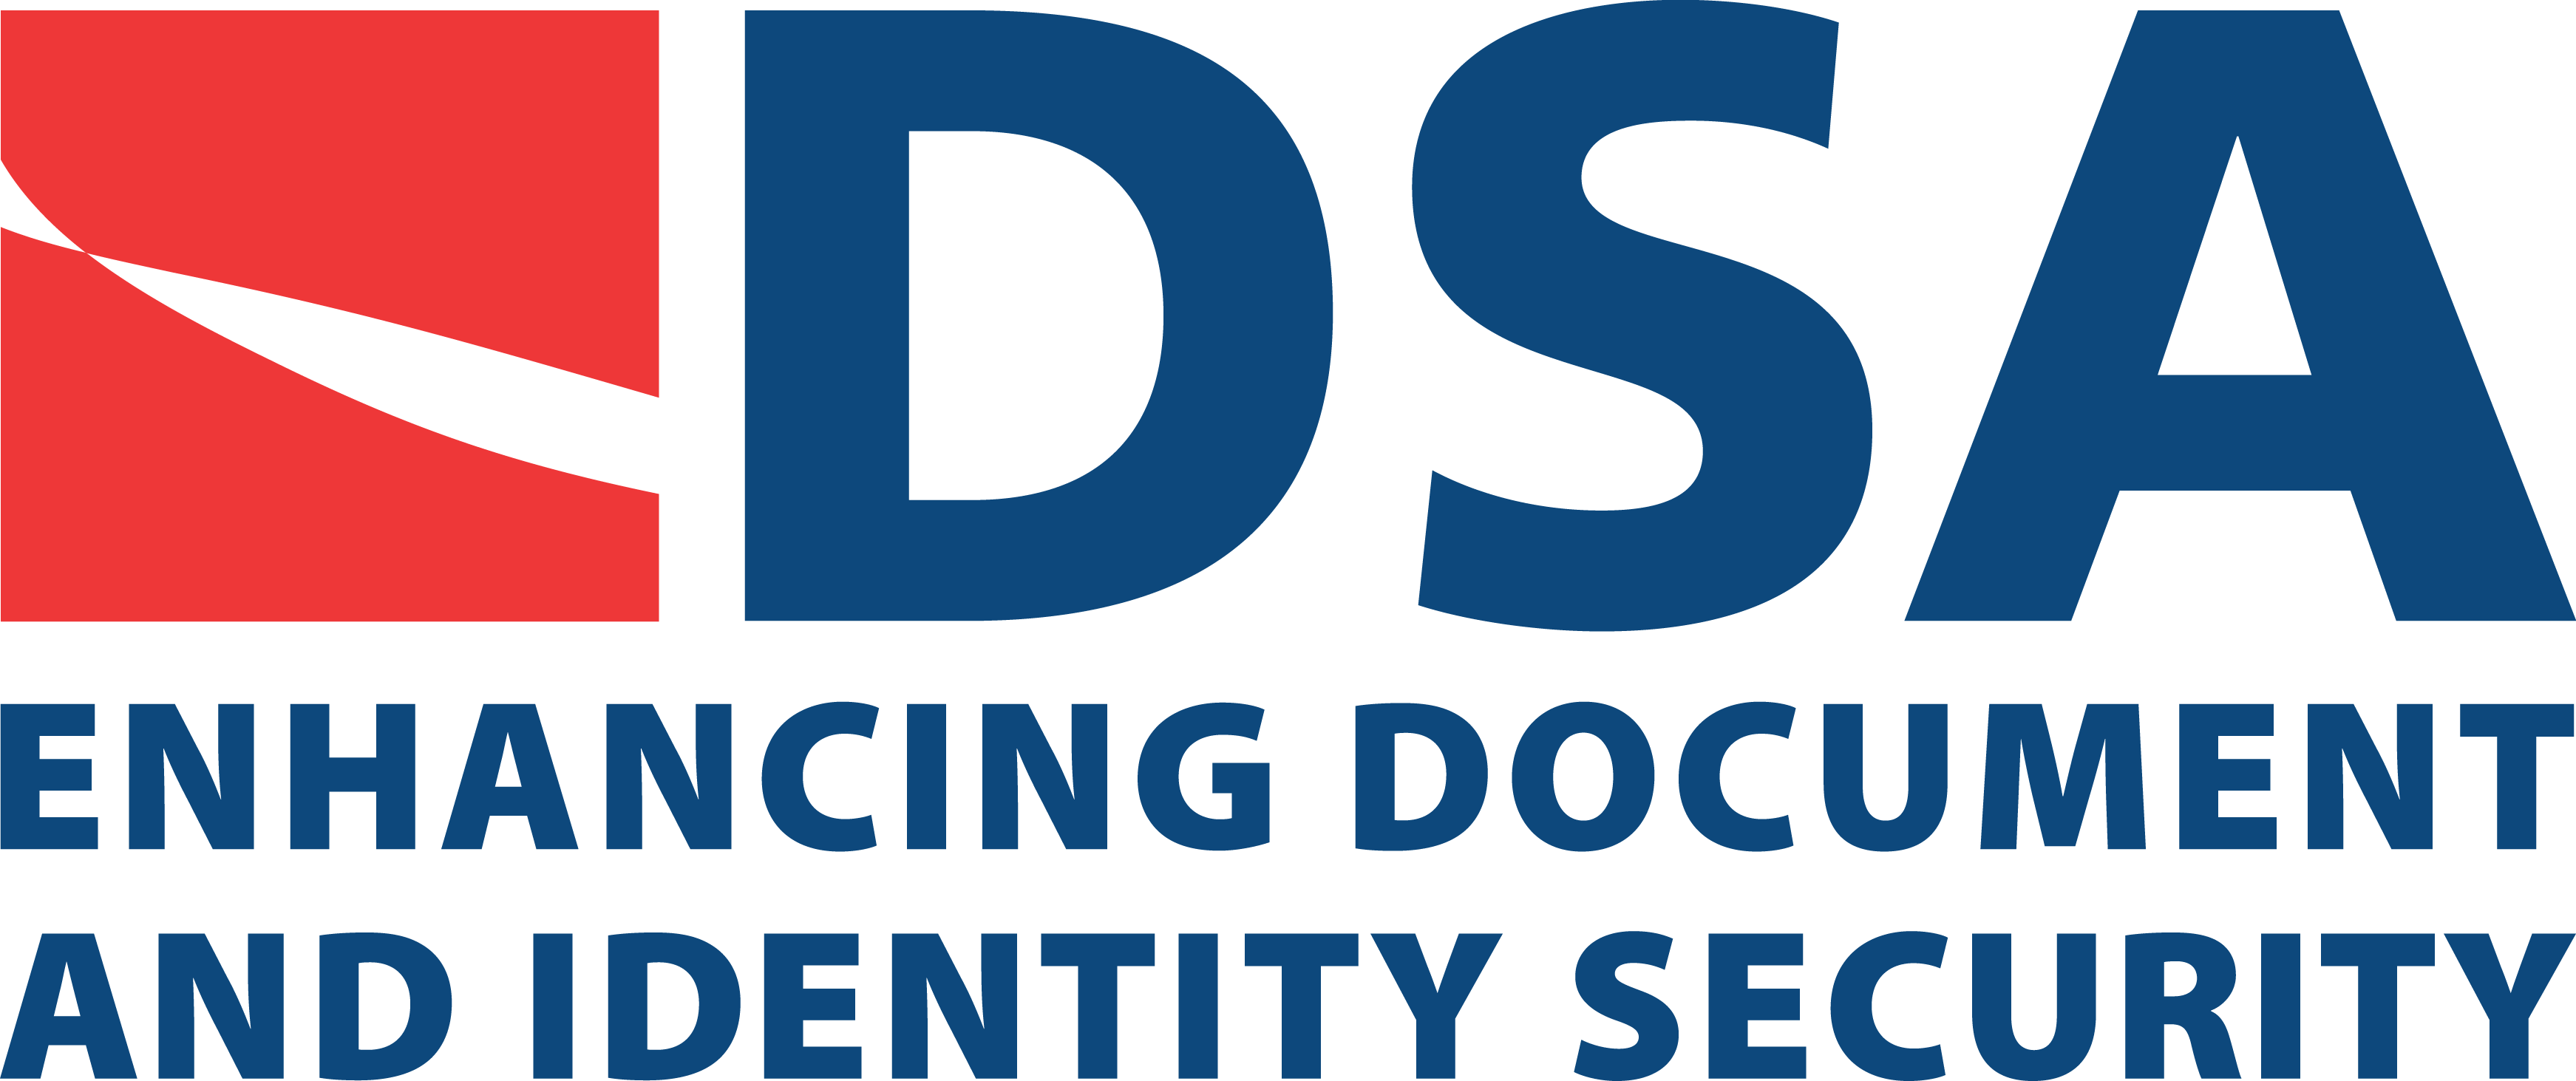 Document Security Alliance : DSA